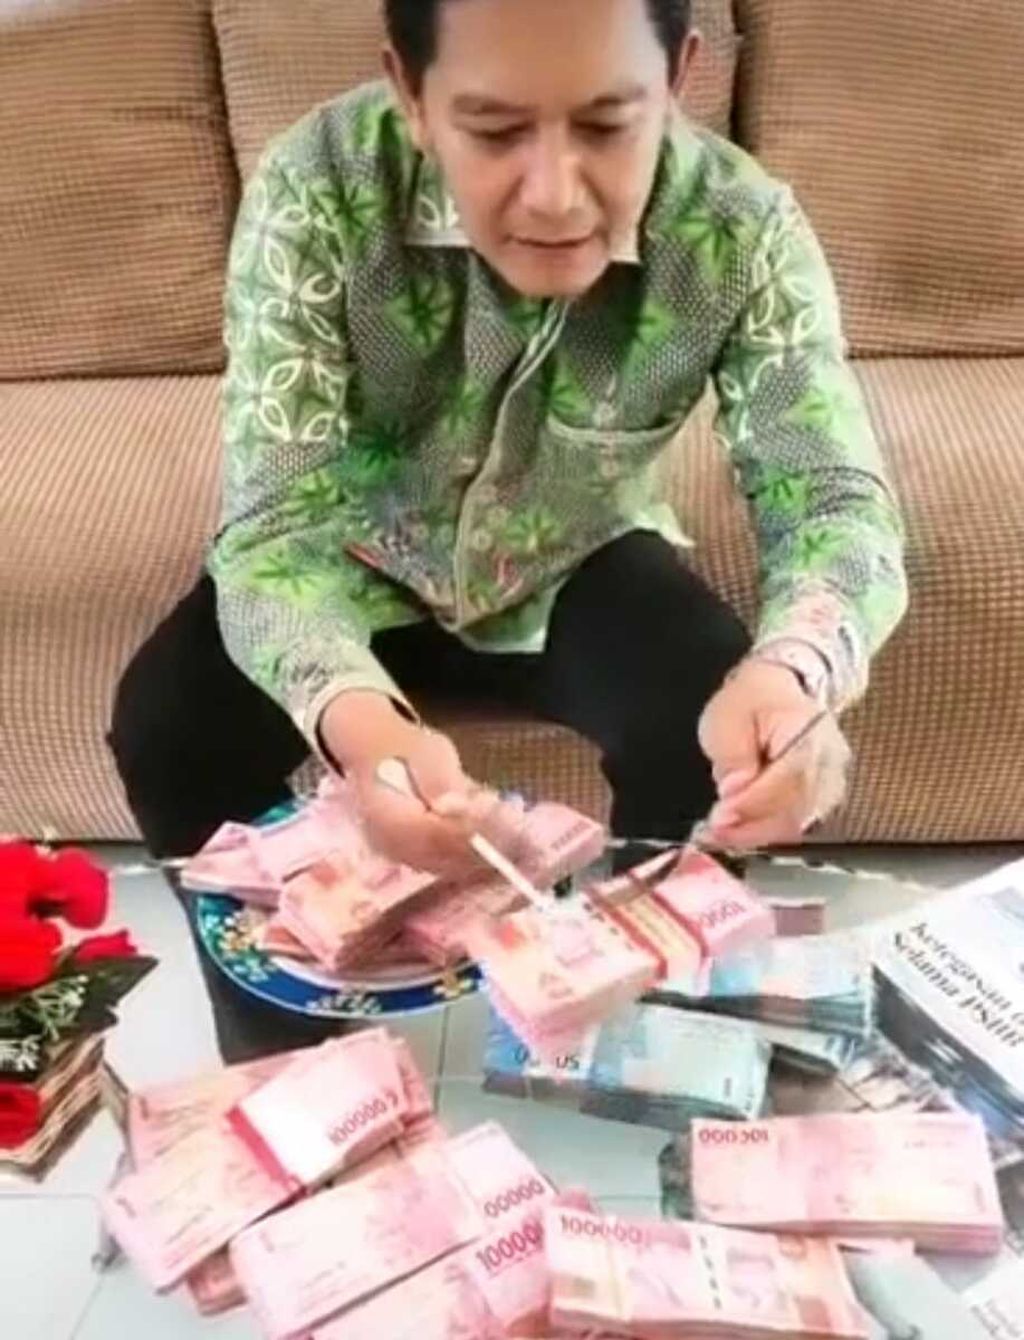 Tangkapan layar video berdurasi 14 detik di Tik Tok yang menunjukkan Direktur Utama Perumda Pasar Niaga Kerta Raharja Syaefunnur Maszah tengah memamerkan tumpukan uang.